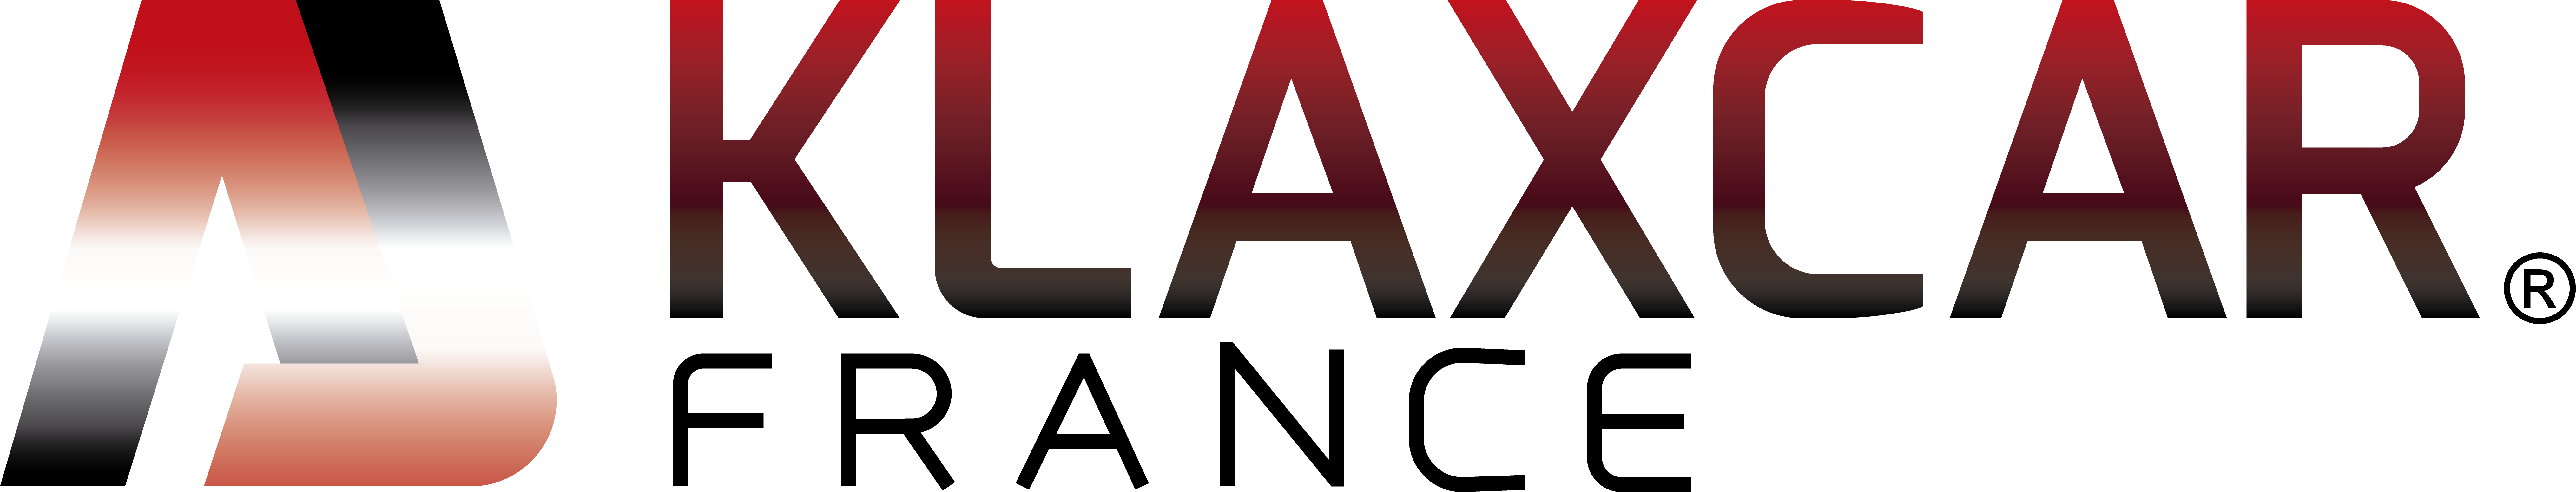 logo klaxcar